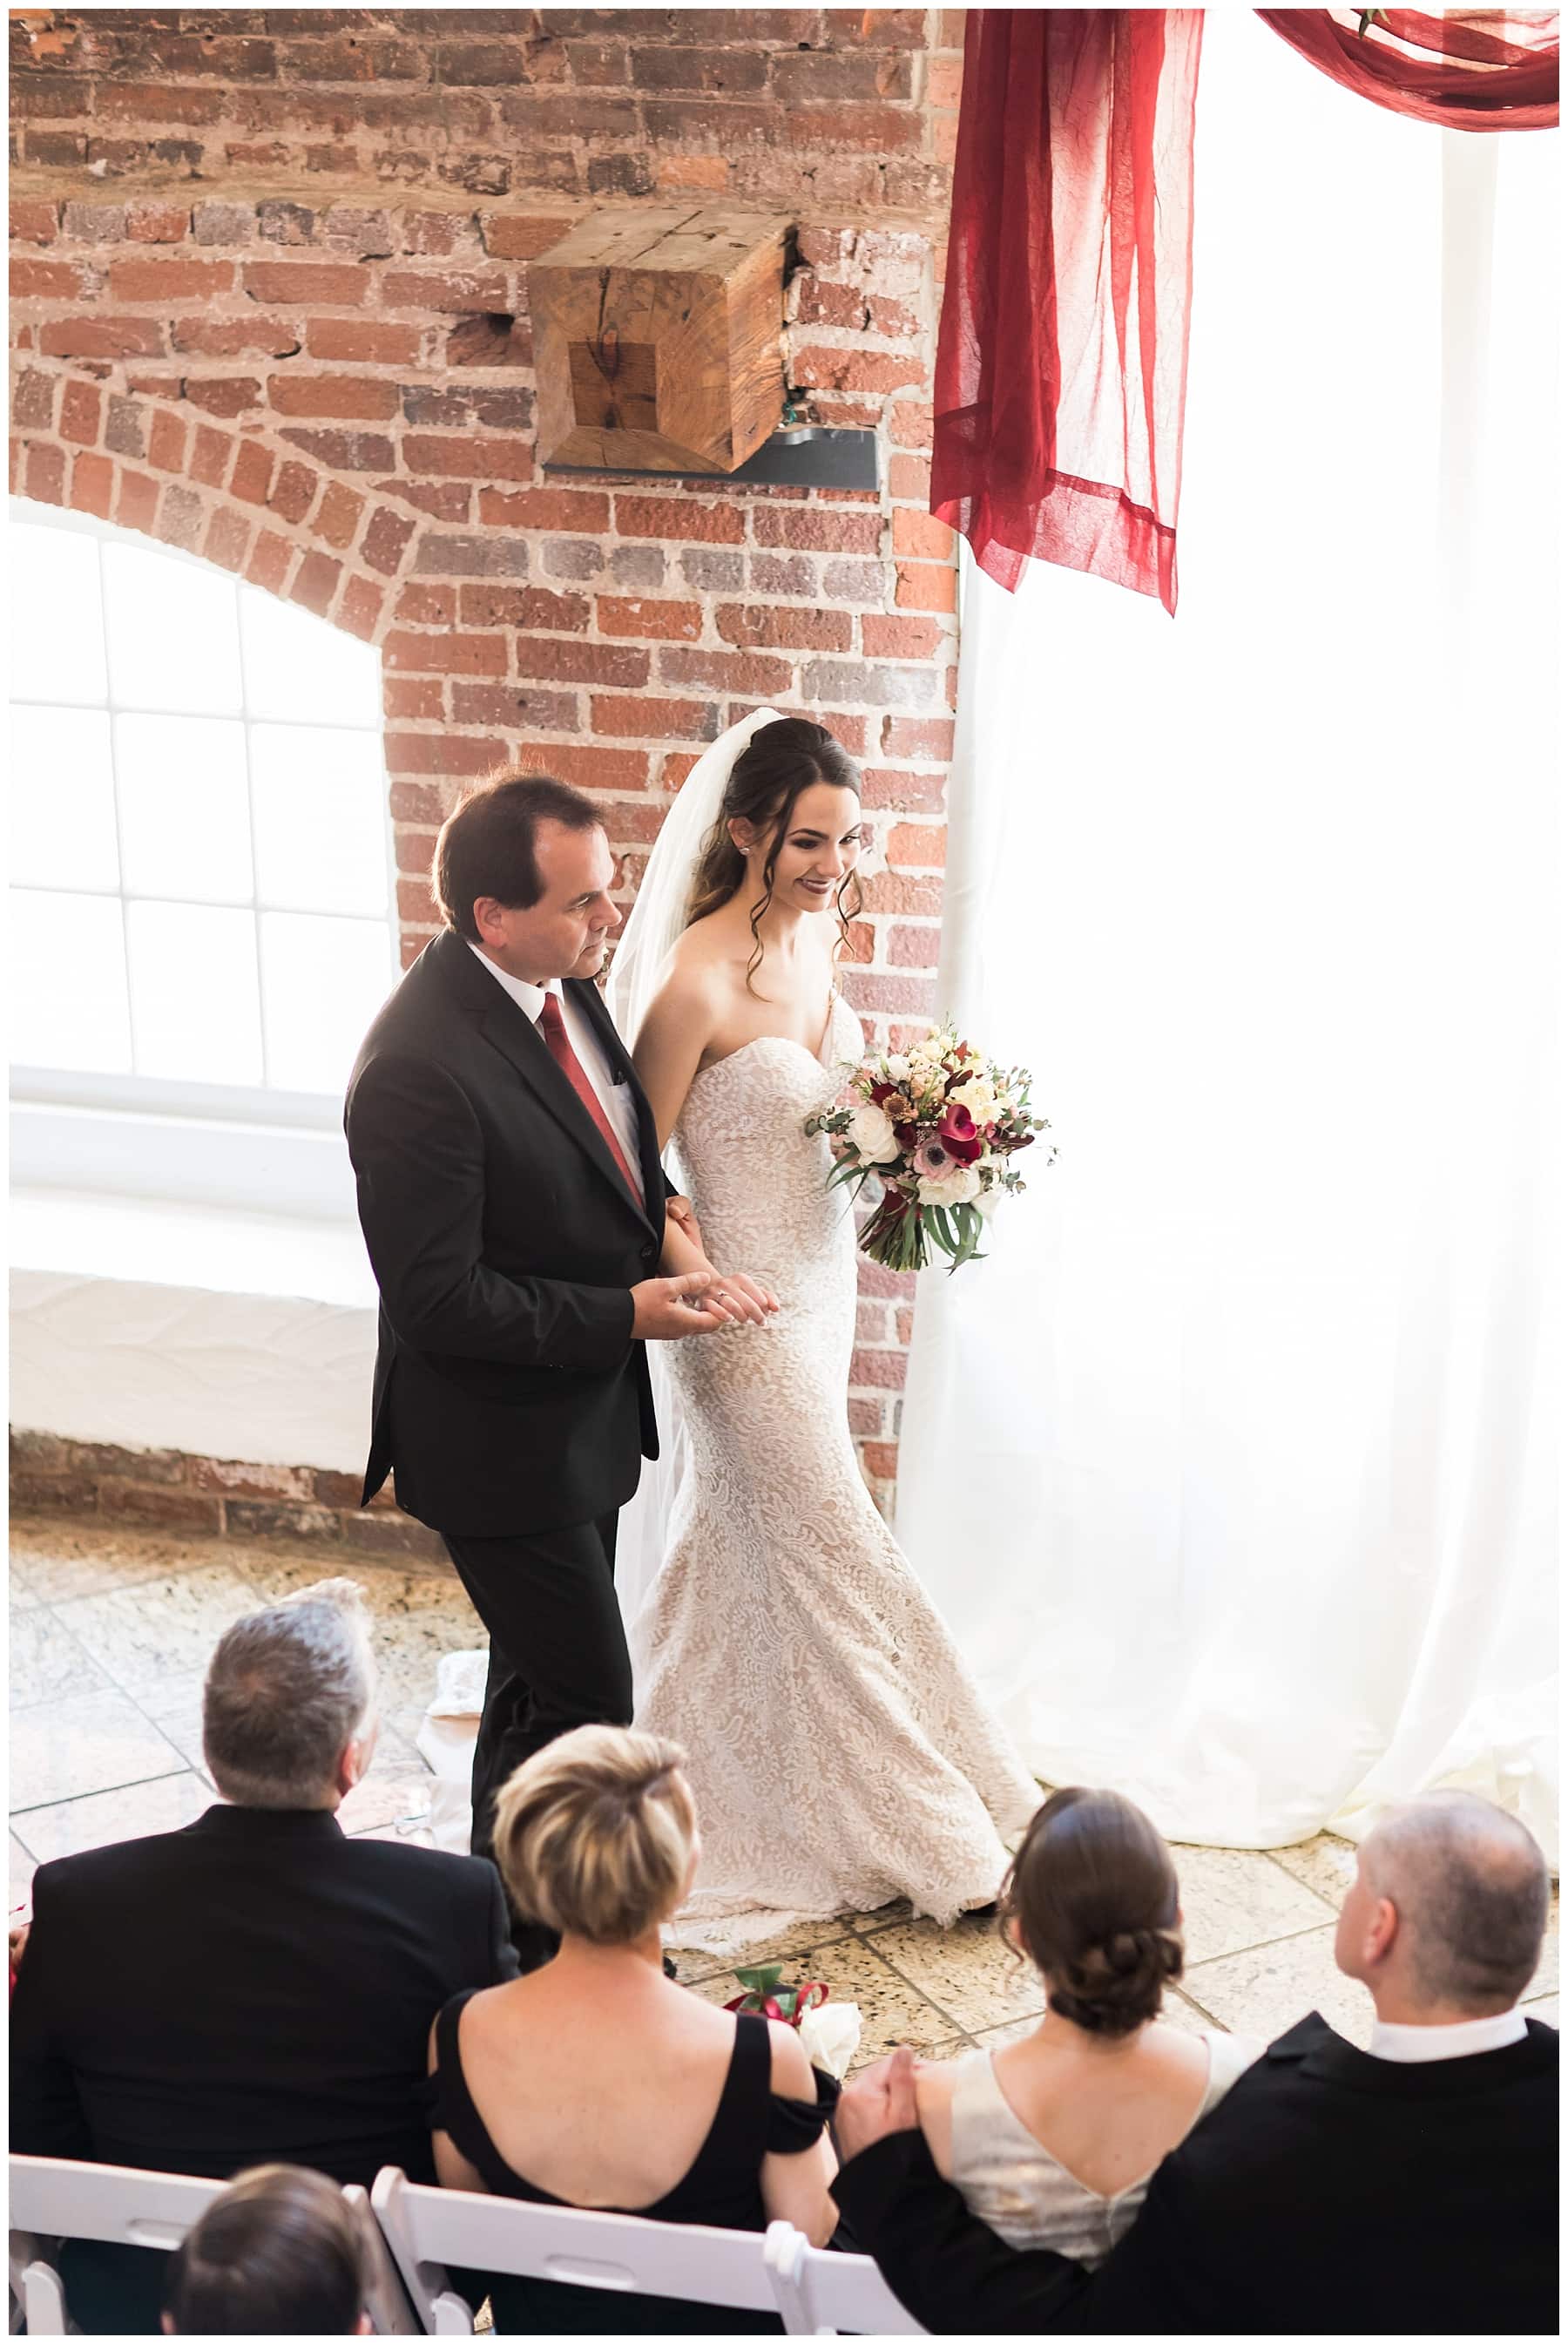 Danielle-Defayette-Photography-Greensboro-NC-Wedding-Venue-Revolution-Mill_0017.jpg